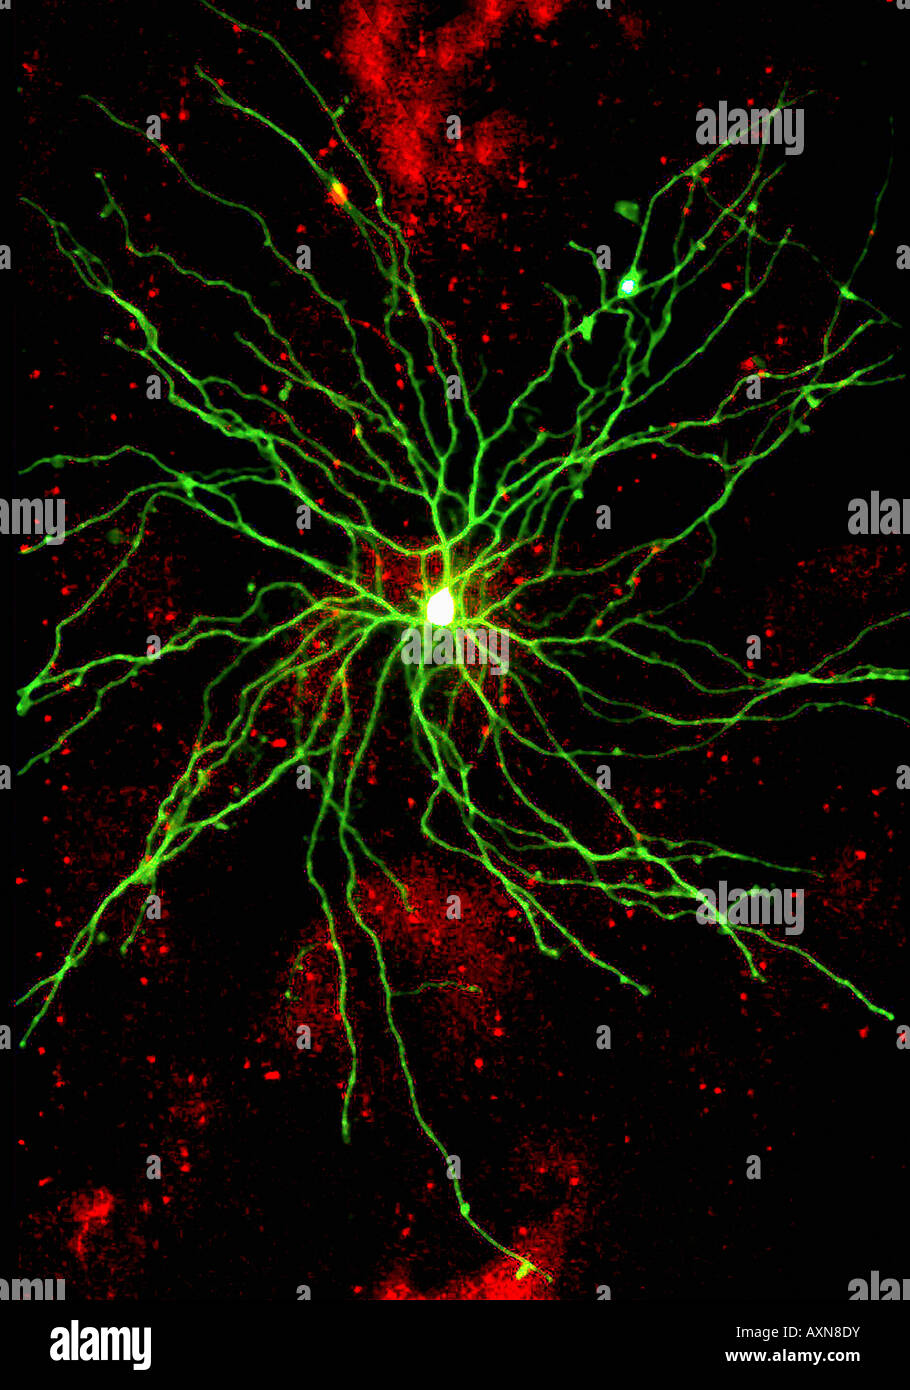 a single brain cell neuron Stock Photo